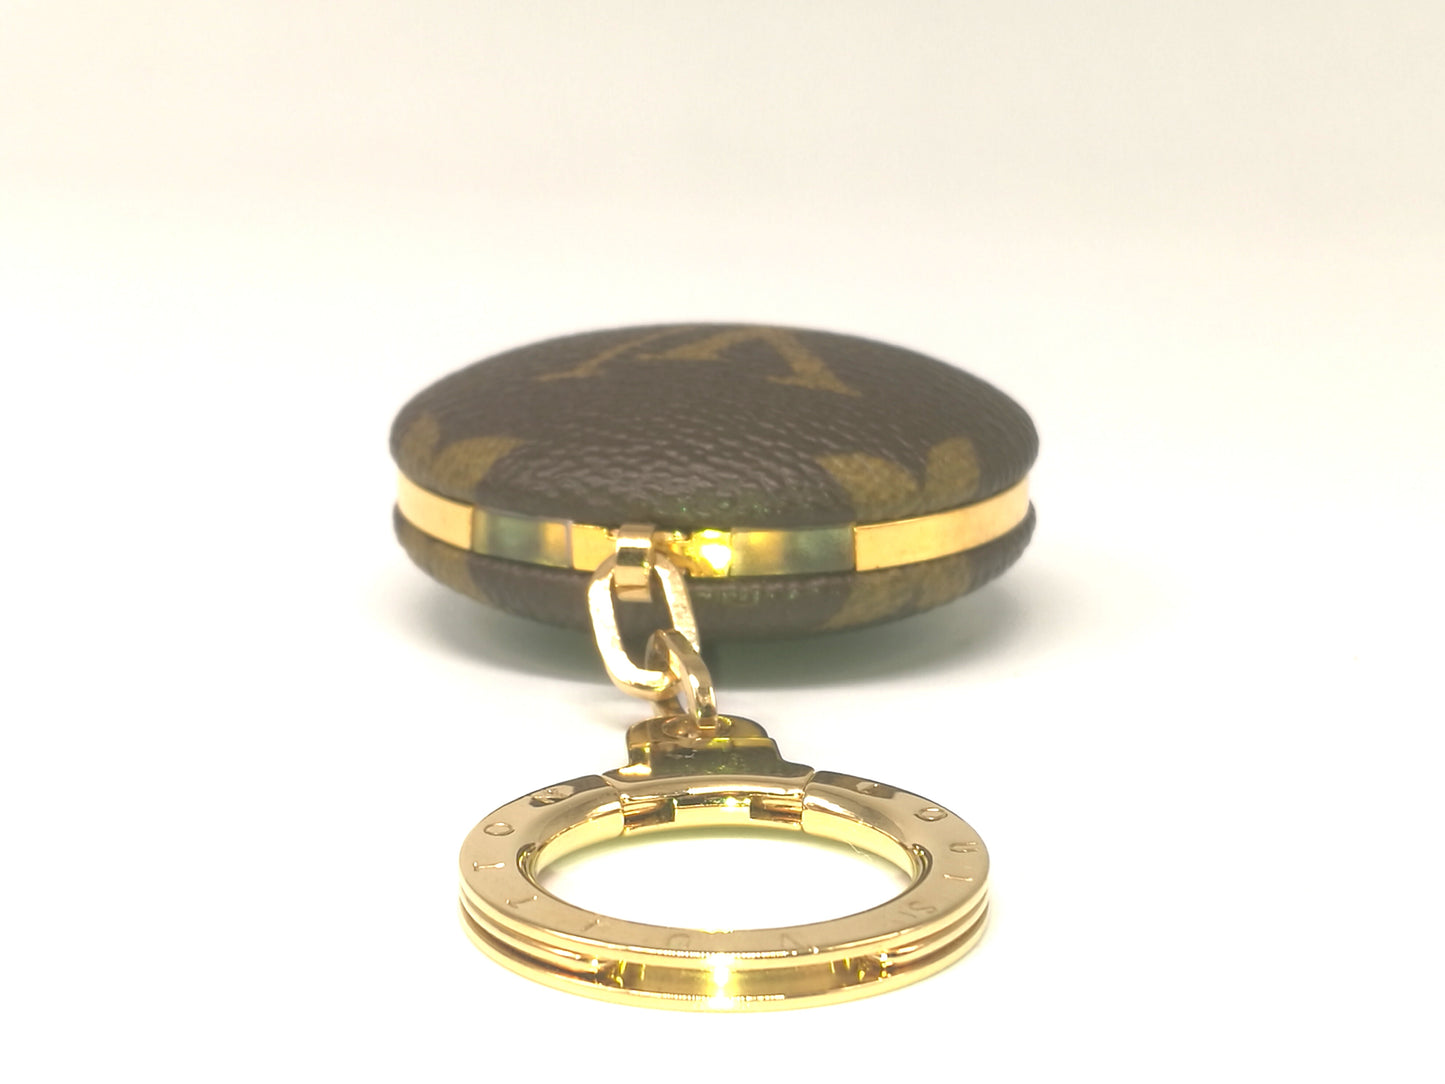 Preloved Louis Vuitton key ring Astropill flash light & bag charm